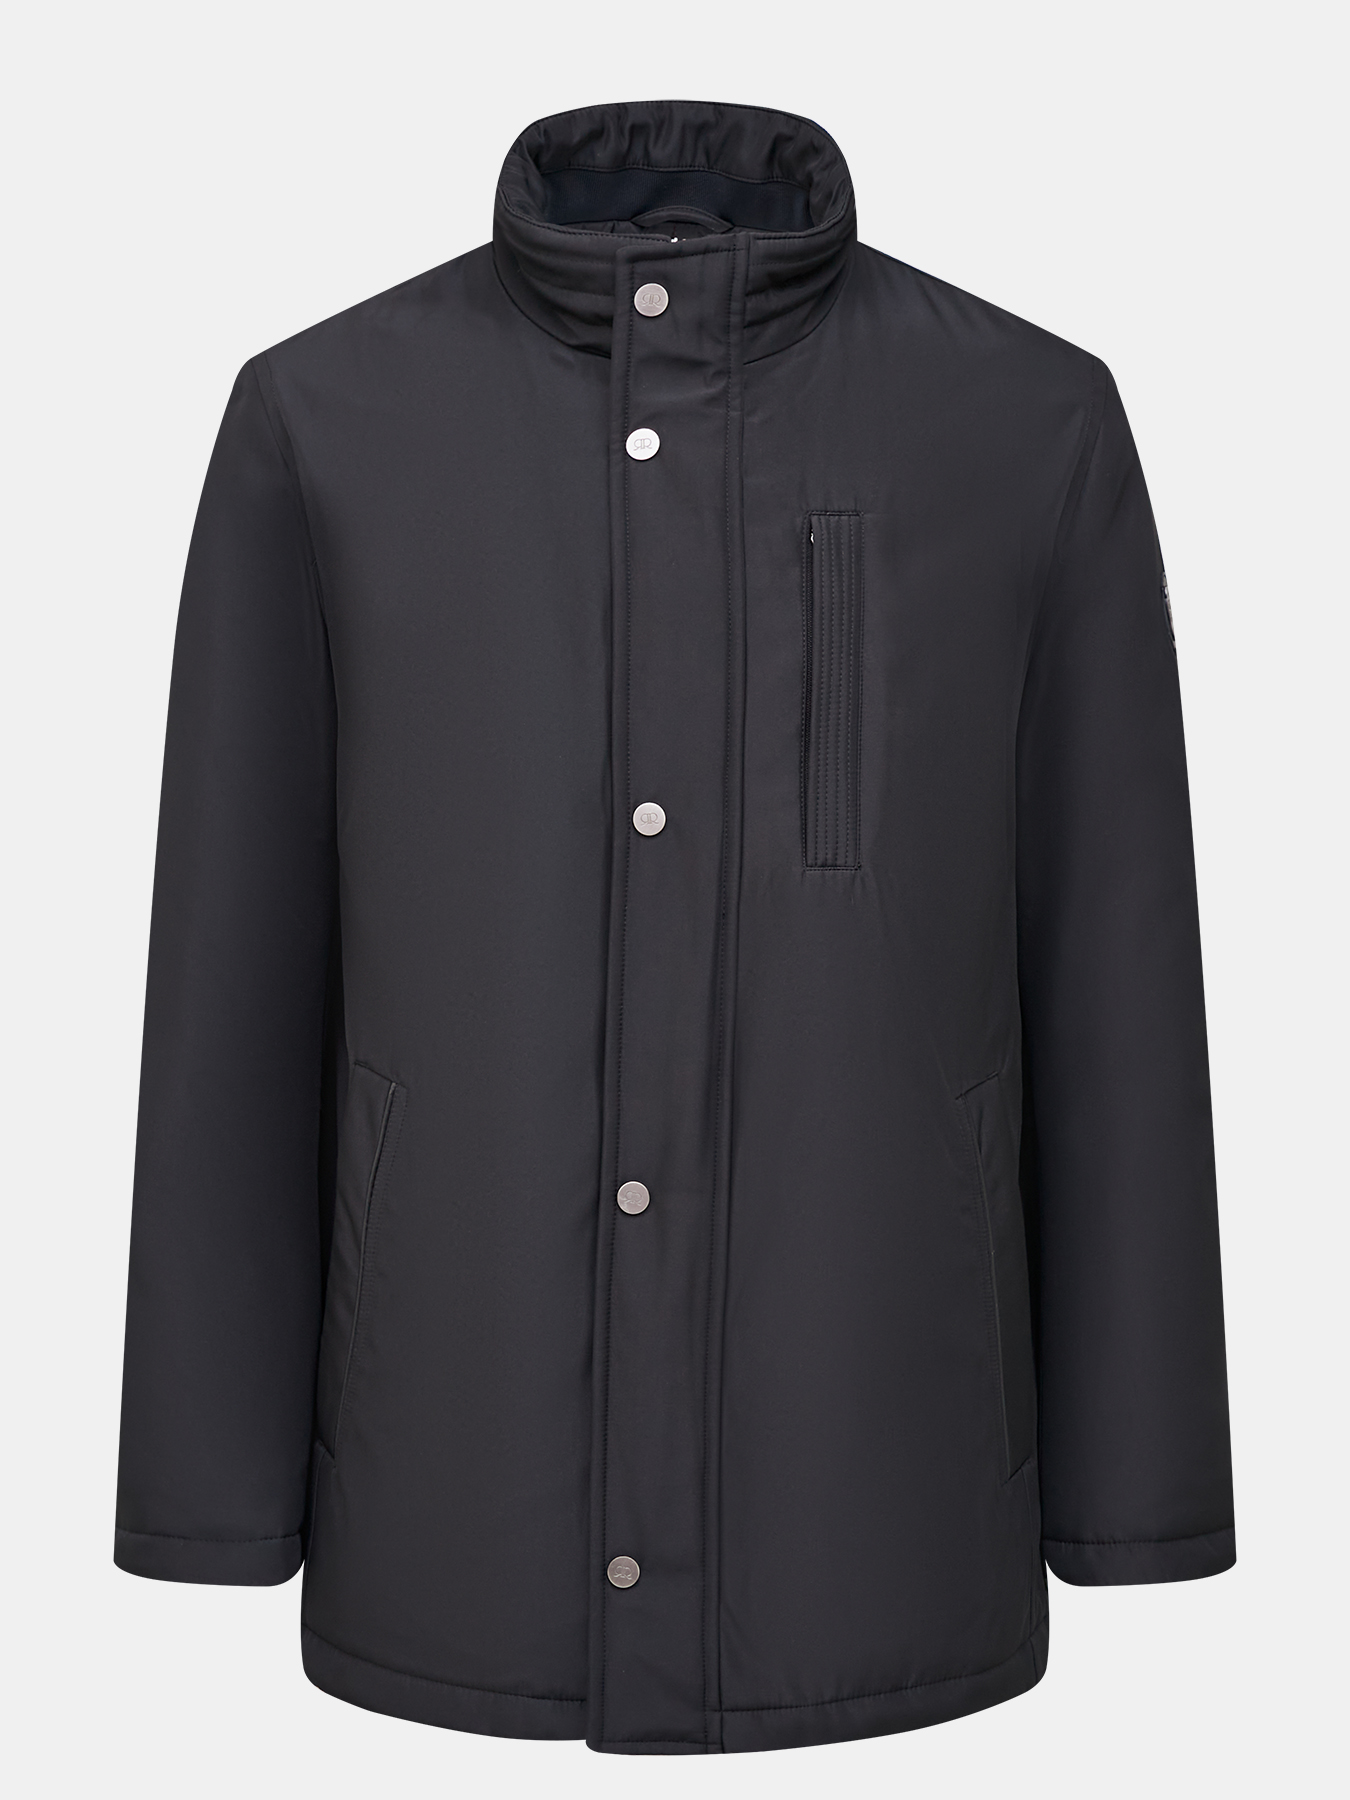 Куртка Ritter 367556-030, цвет черный, размер 58 - фото 1